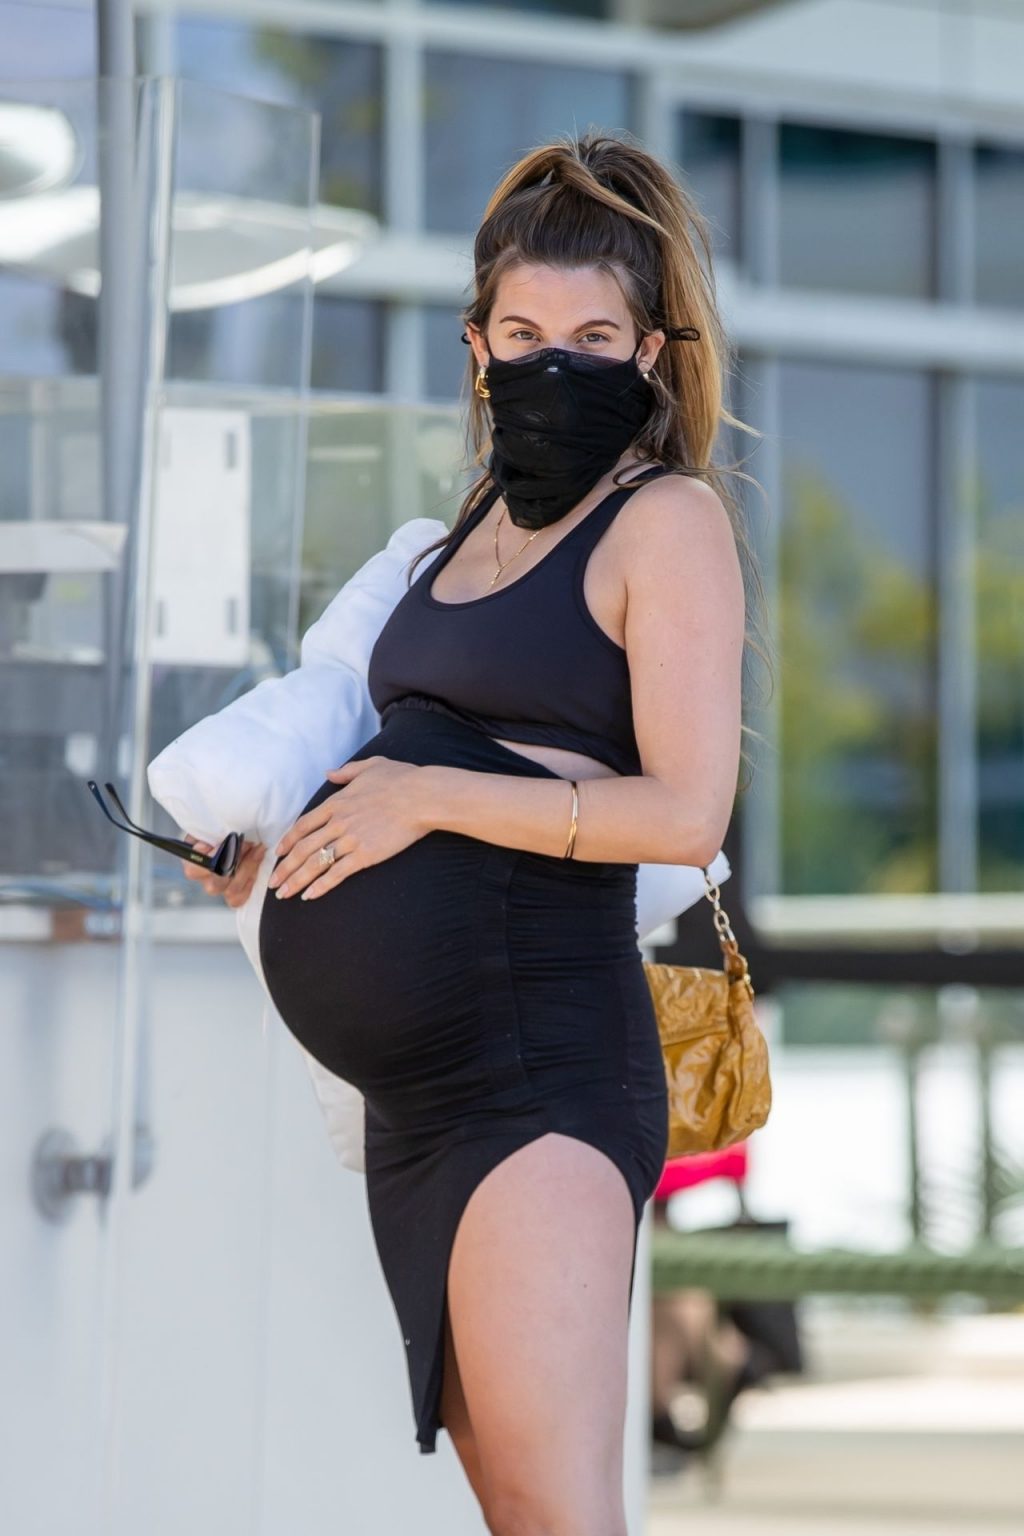 Rachel McCord pregnant photos Instagram COVID 19 celebrity boobs 